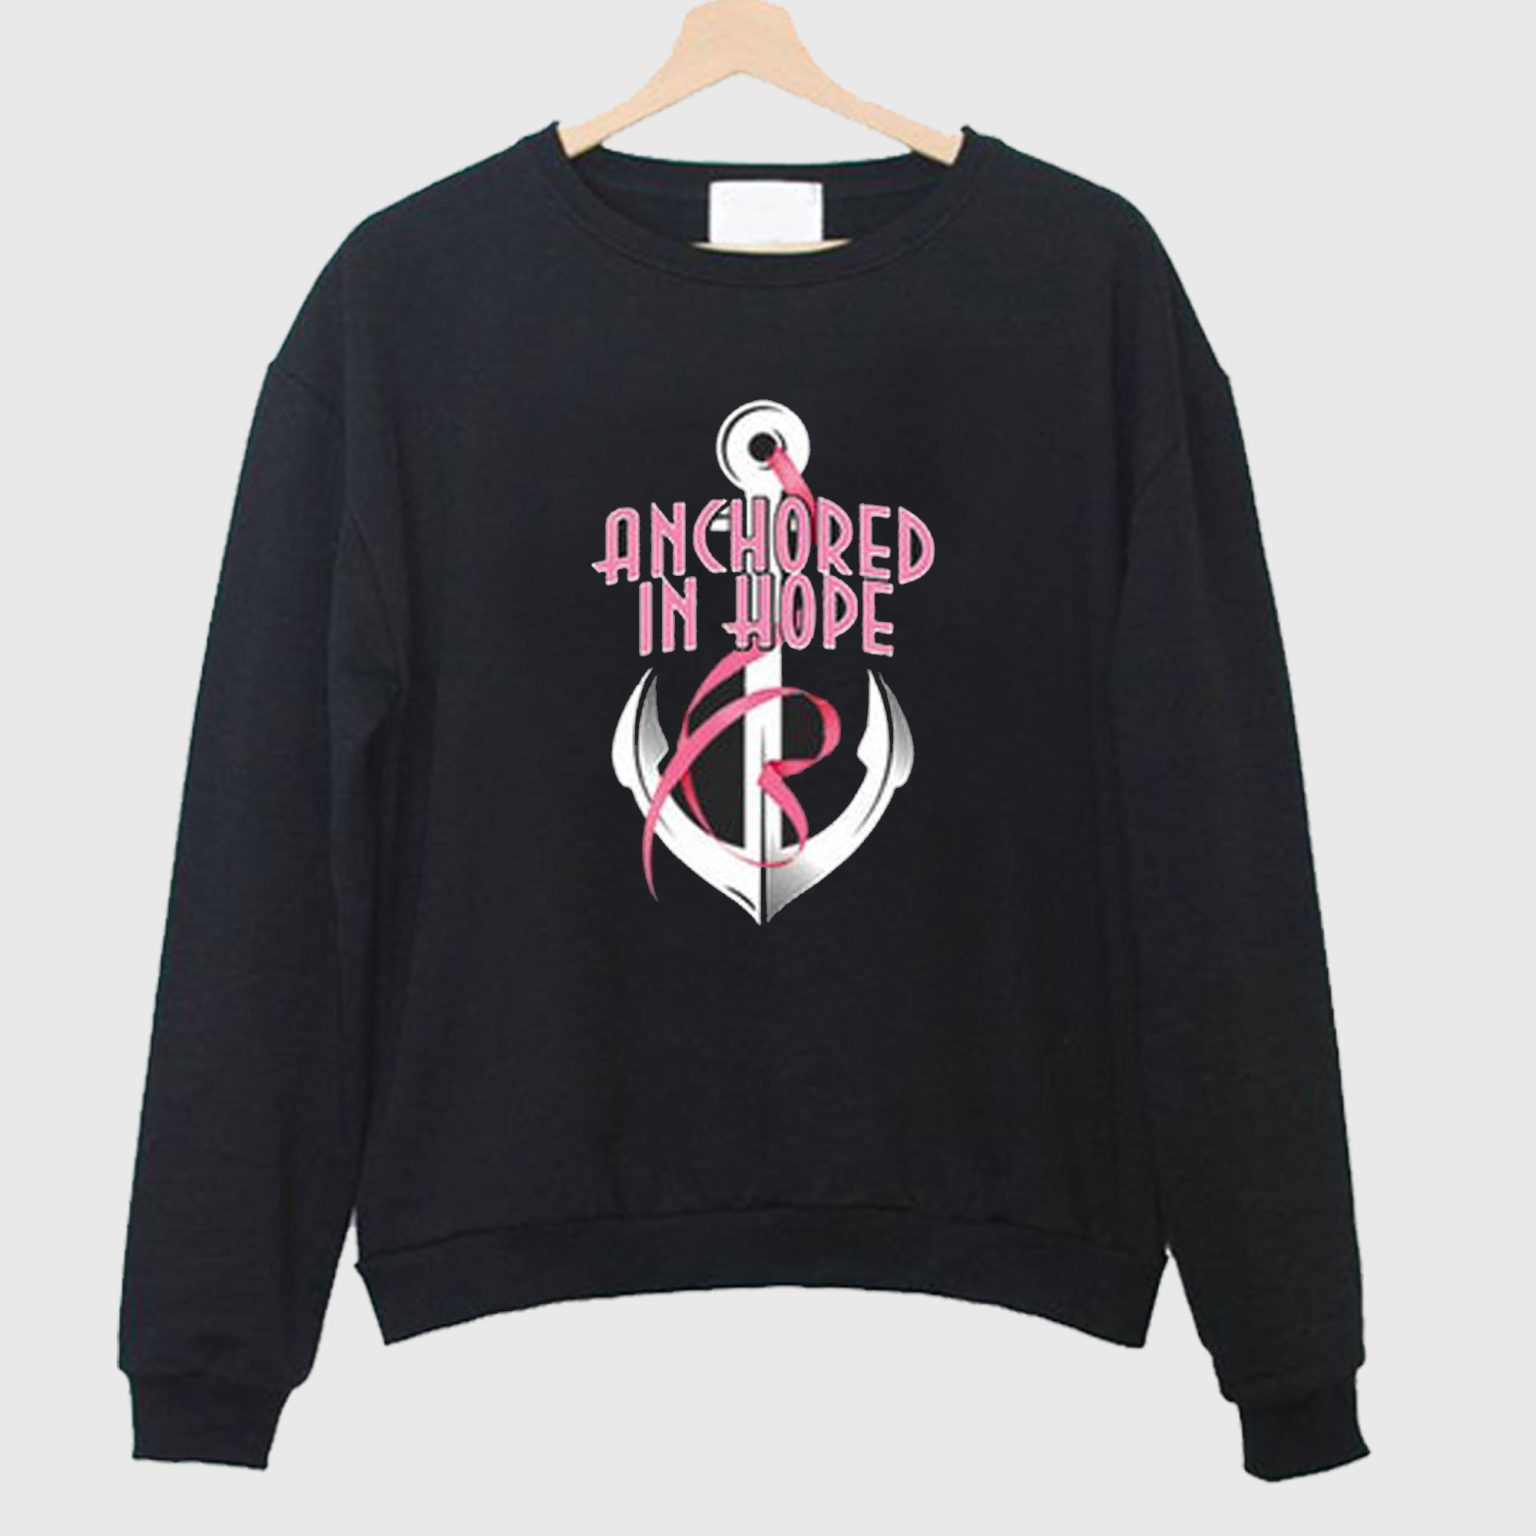 Anchored in Hope Sweatshirt